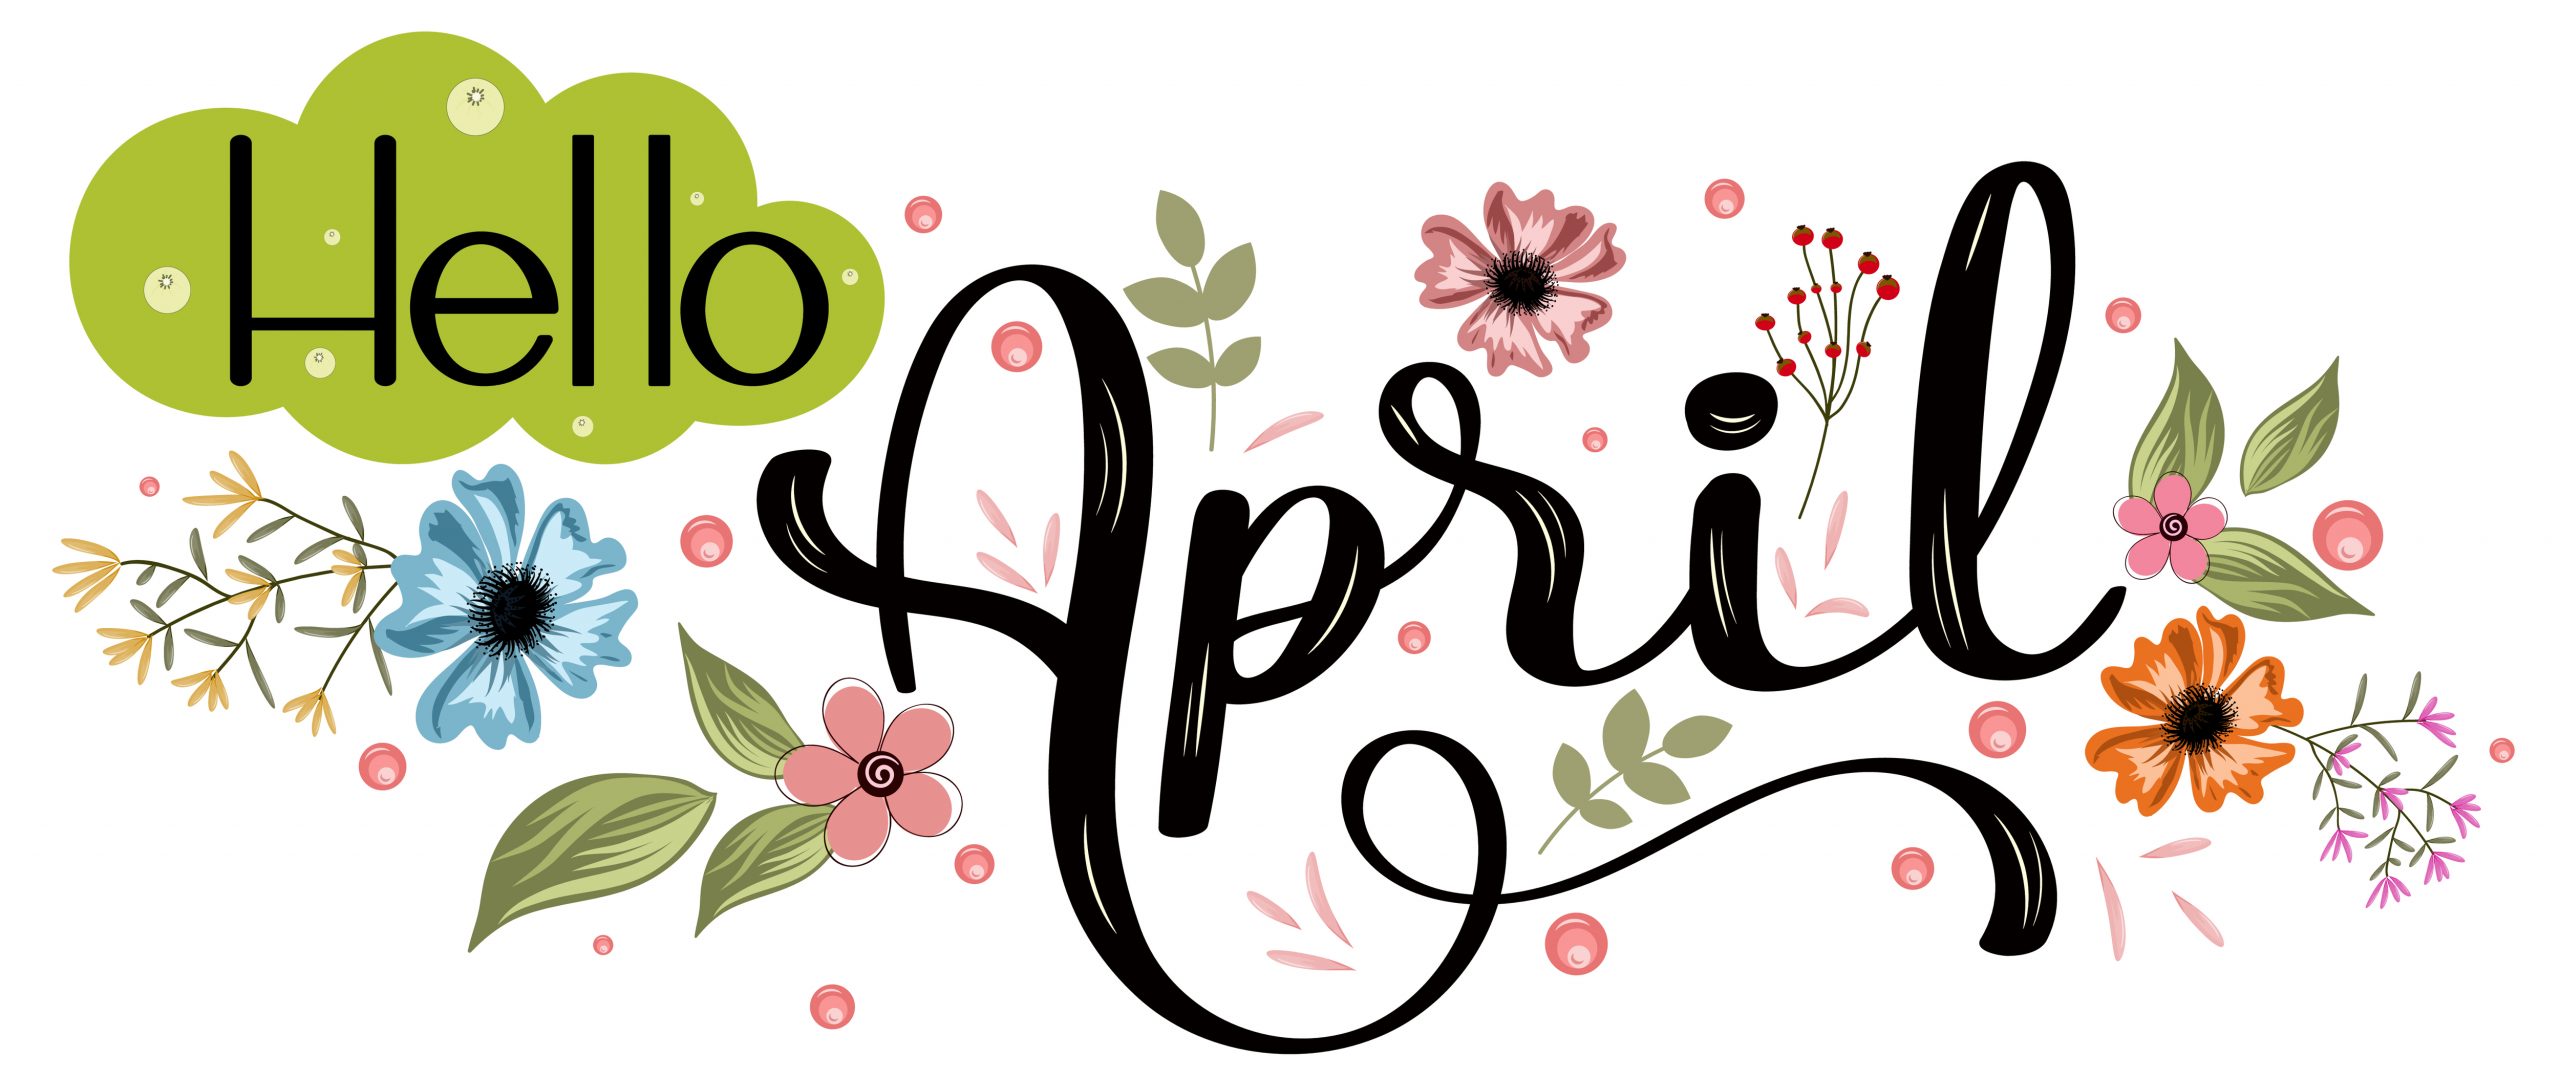 april-garden-tasks